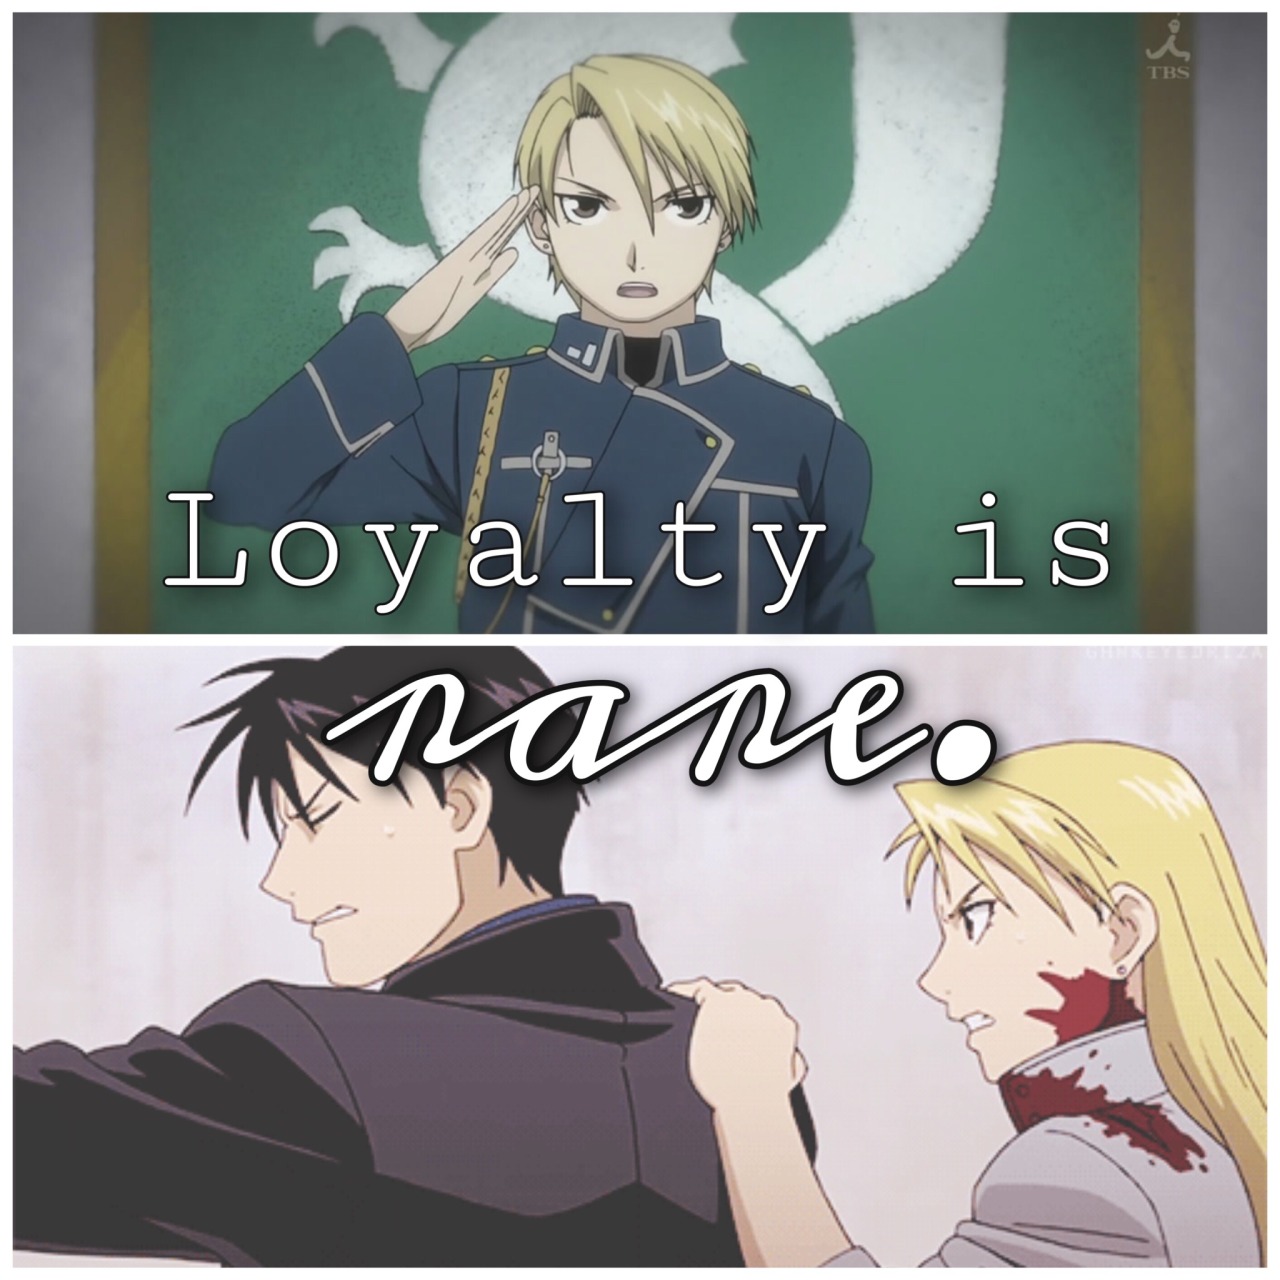 XXX karinakamichi:“Loyalty is rare. If you photo